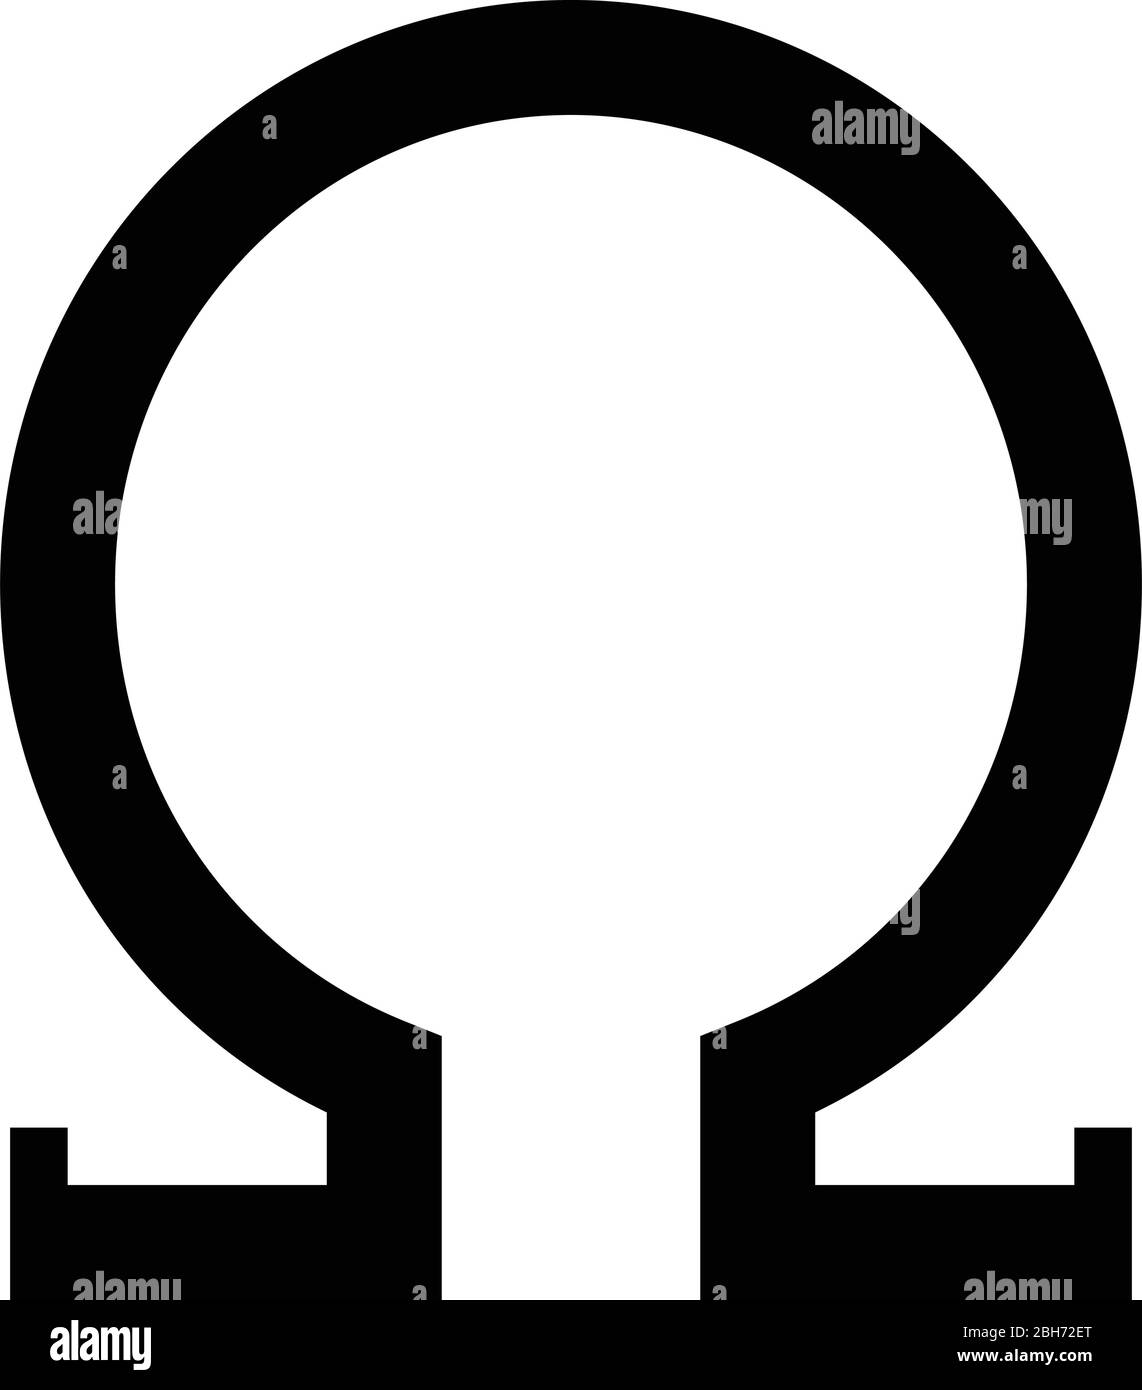 Omega greek symbol capital letter uppercase font icon black color vector illustration flat style simple image Stock Vector